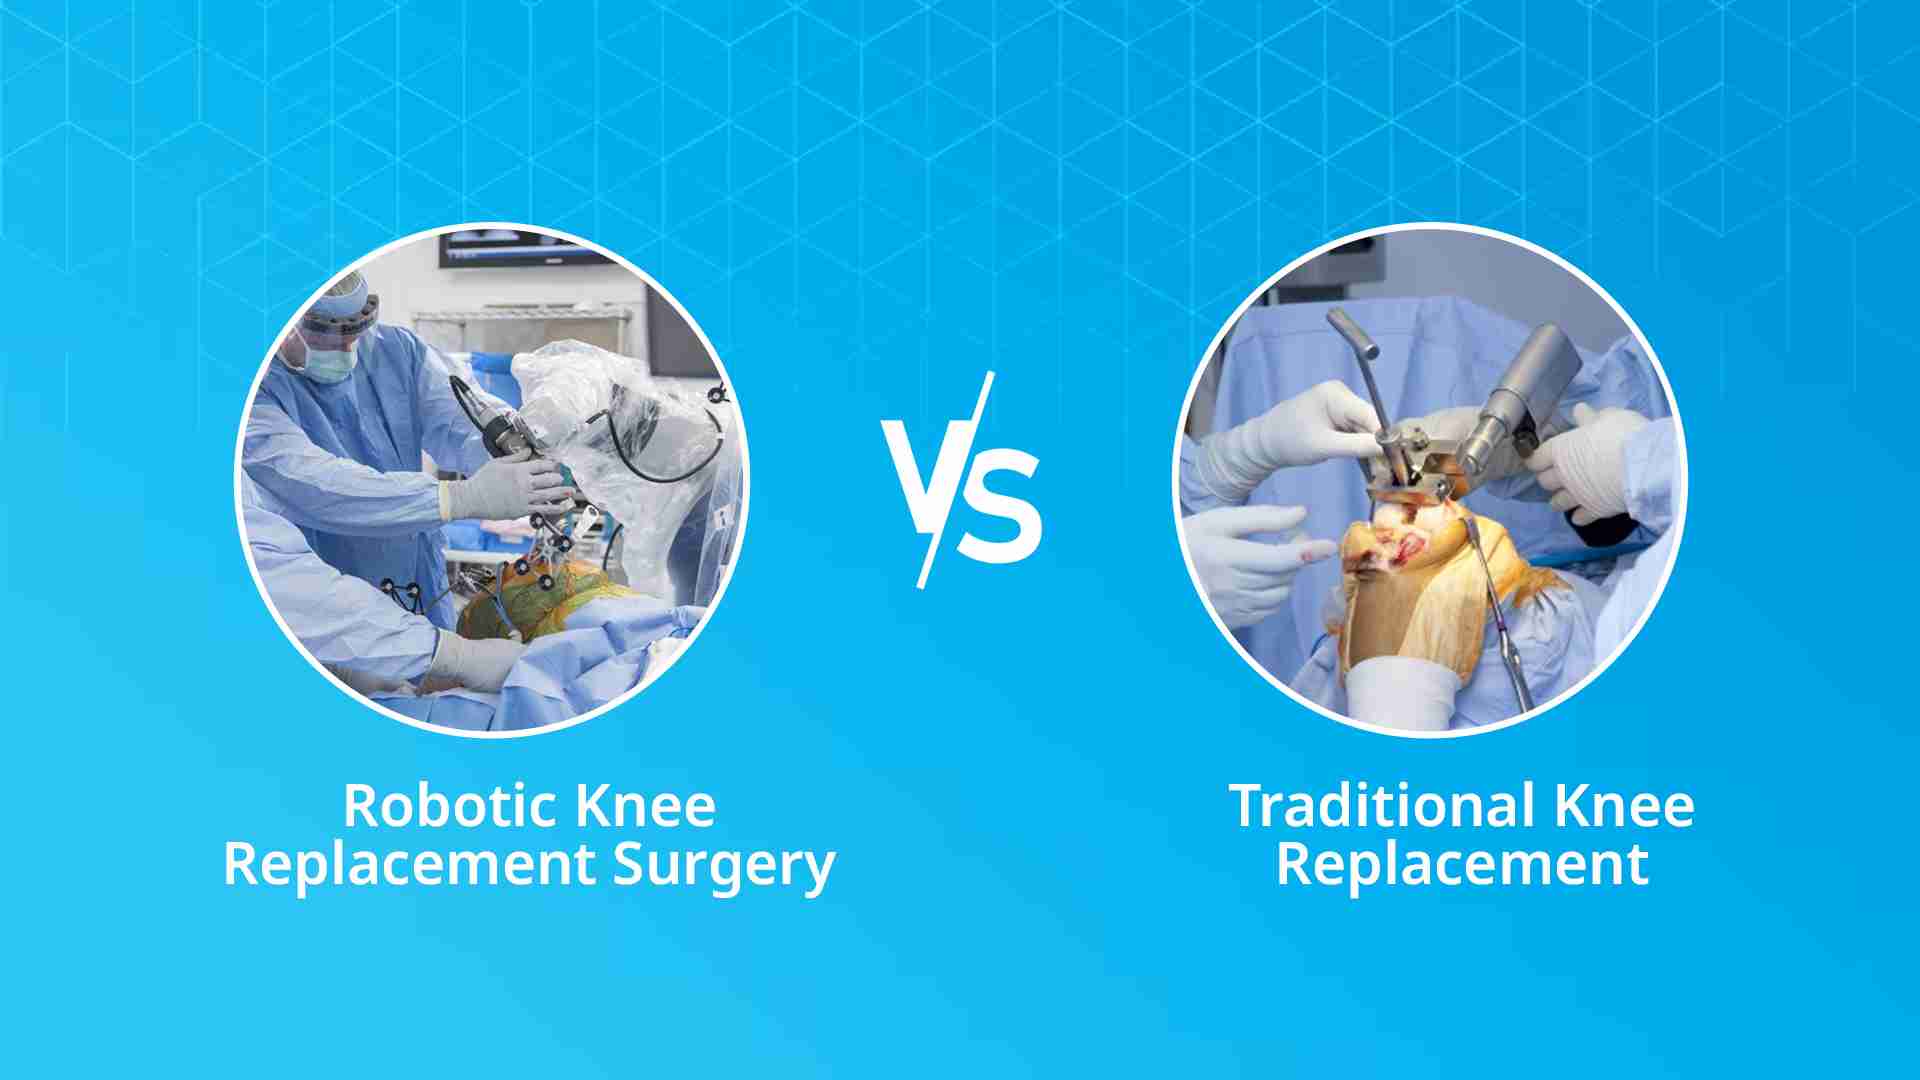 Robotic Knee Replacement Surgery vs. Traditional Knee Replacement Surgery